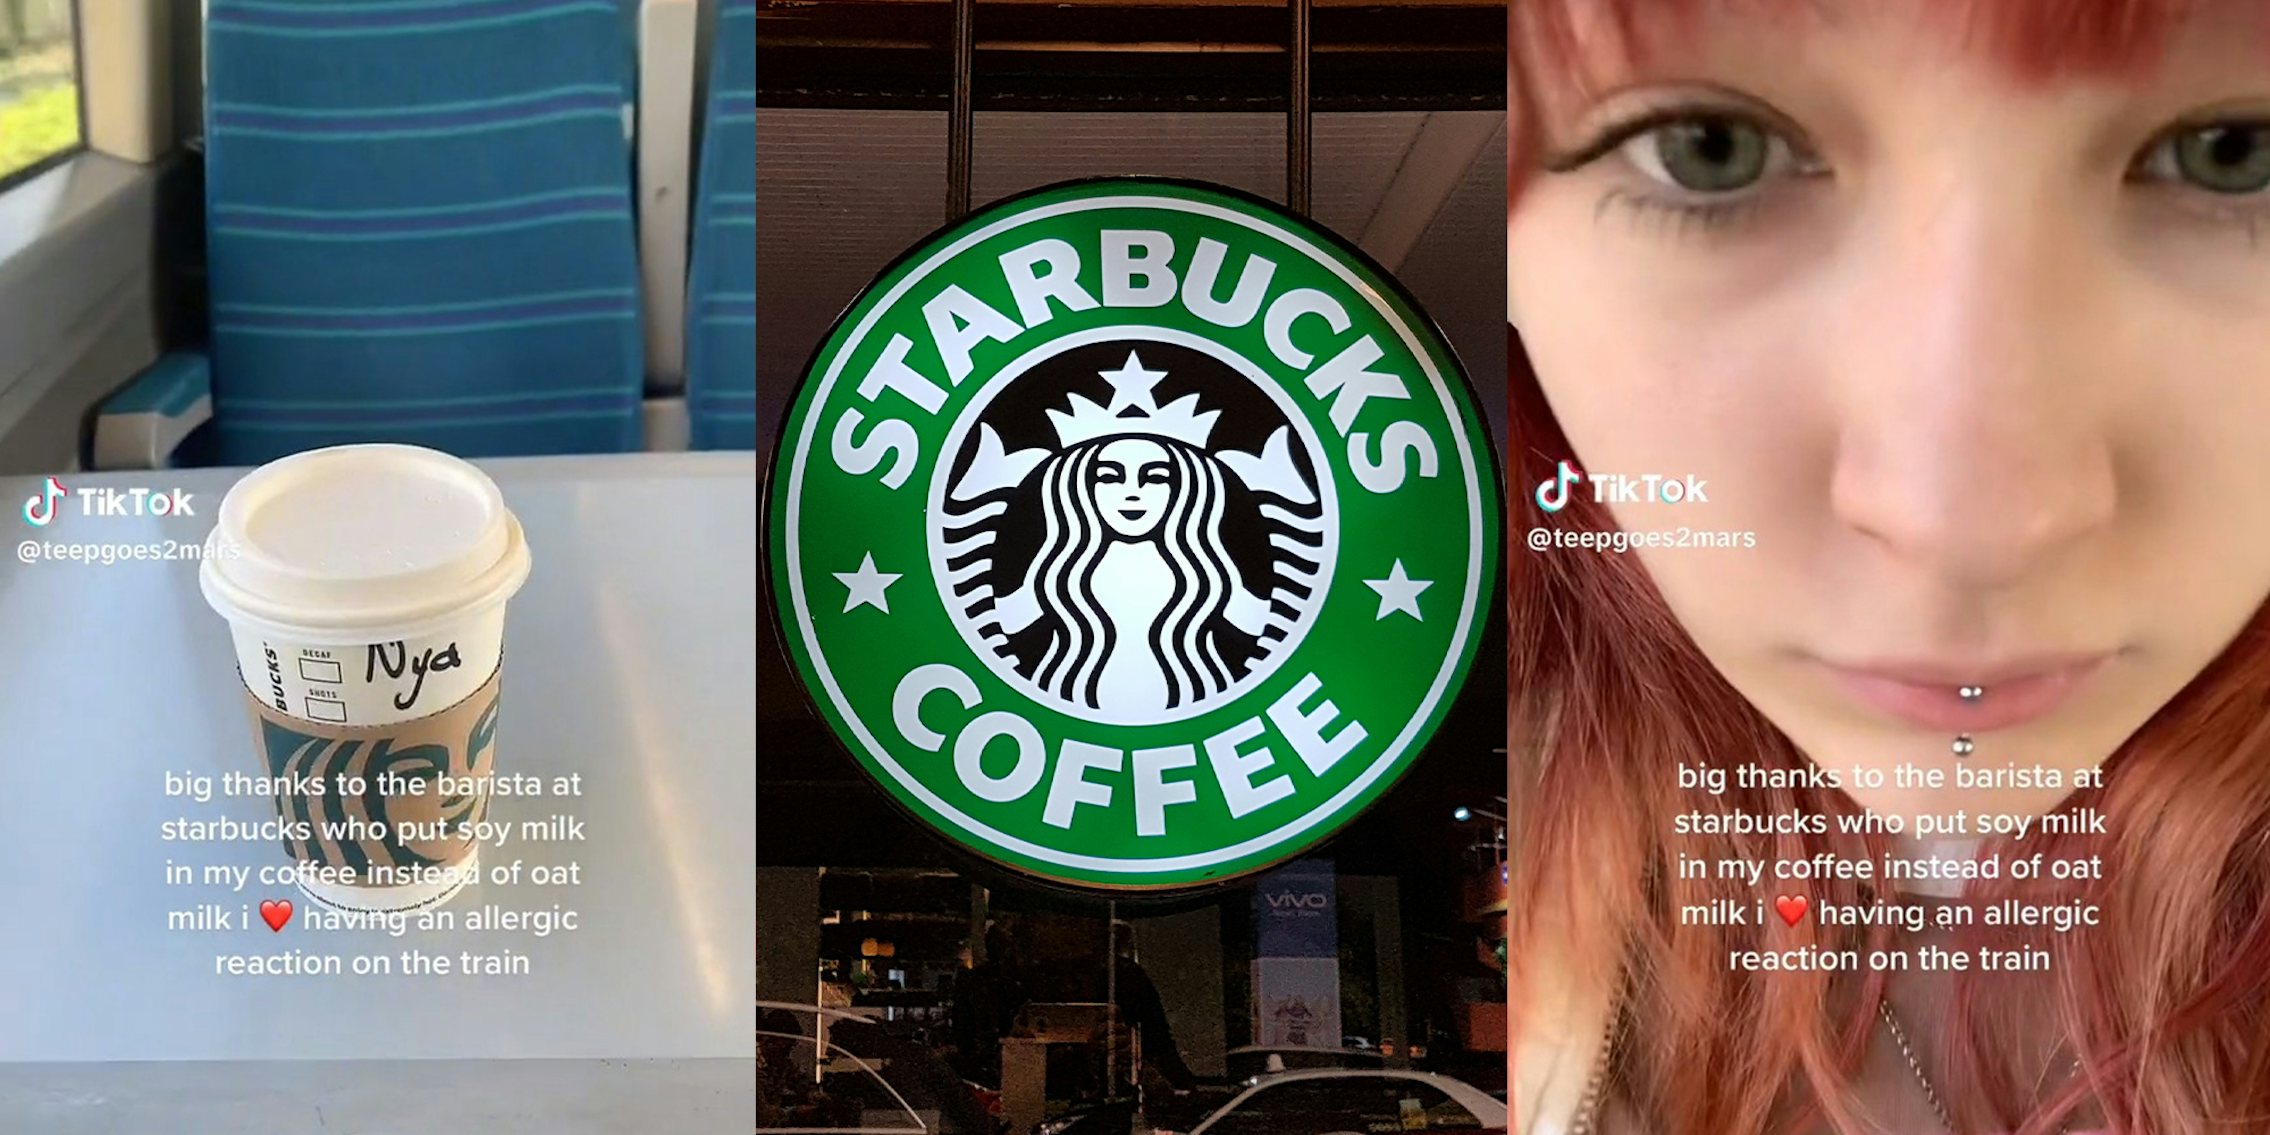 Customer explains that Starbucks barista put soy milk instead of oat milk in her drink